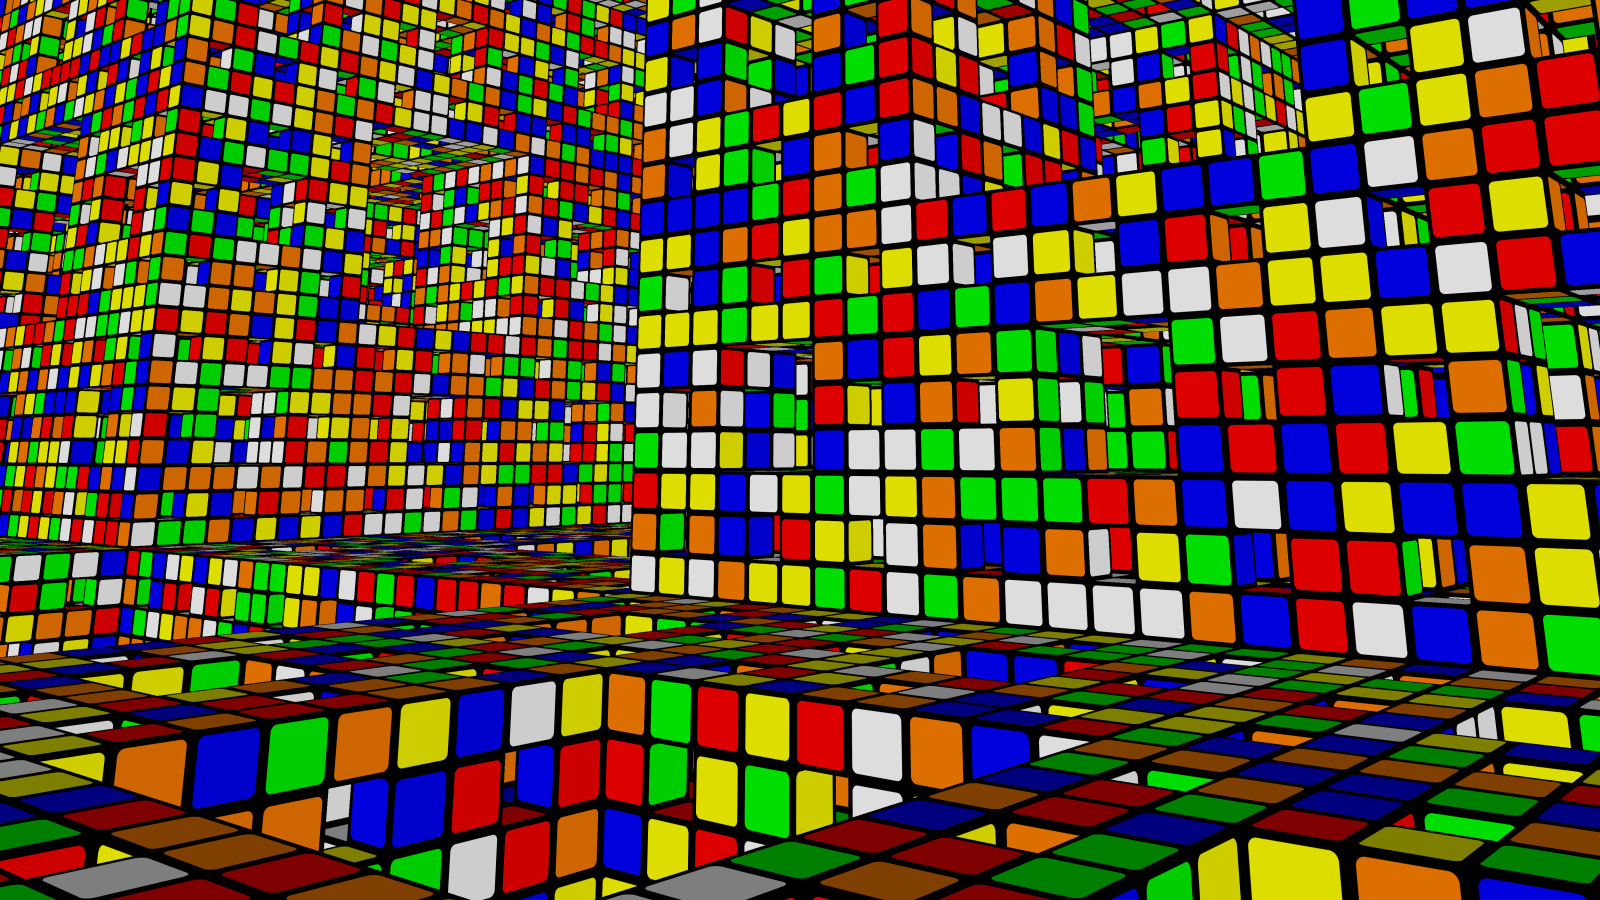 Digital Art Tiles Square Colorful Cube 3d Rubiks